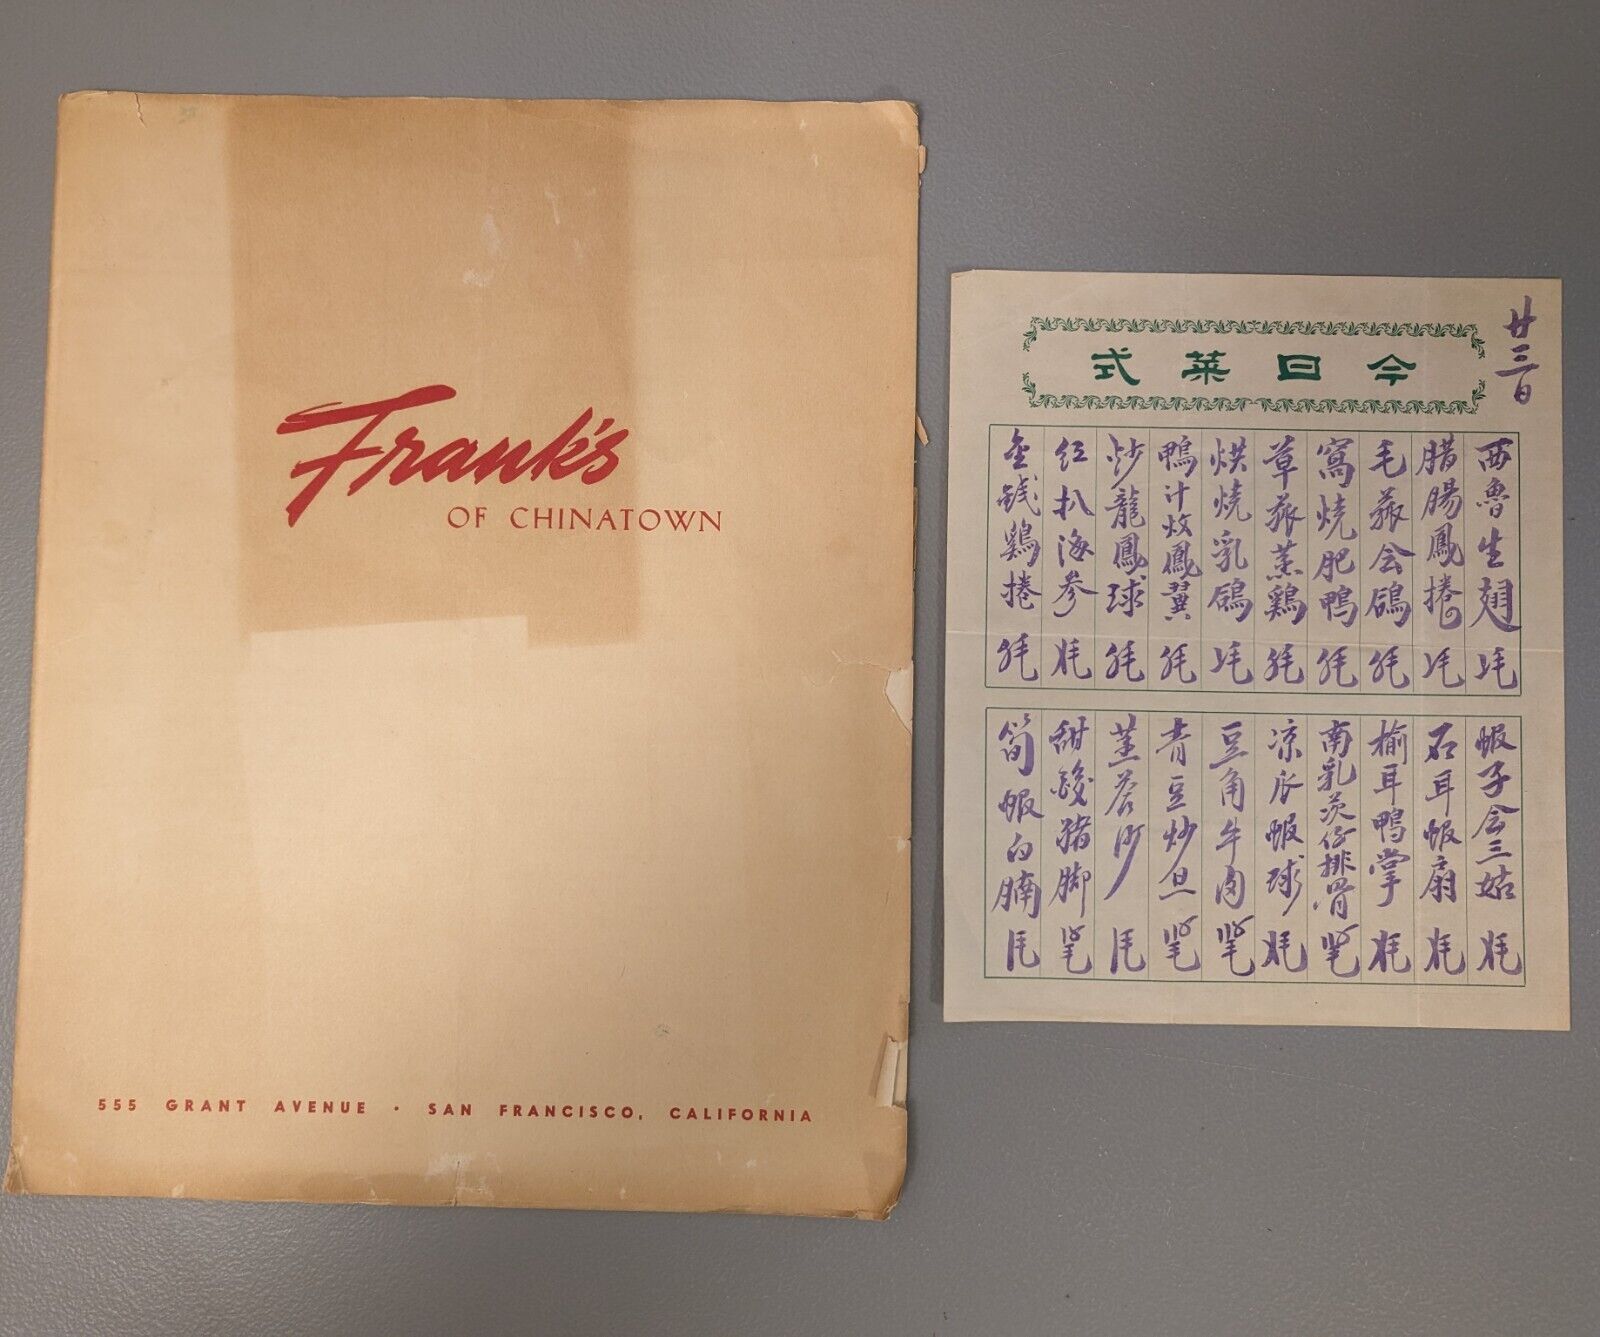 Vintage Frank\'s of Chinatown Menu - San Francisco California - Rare Chinese Food